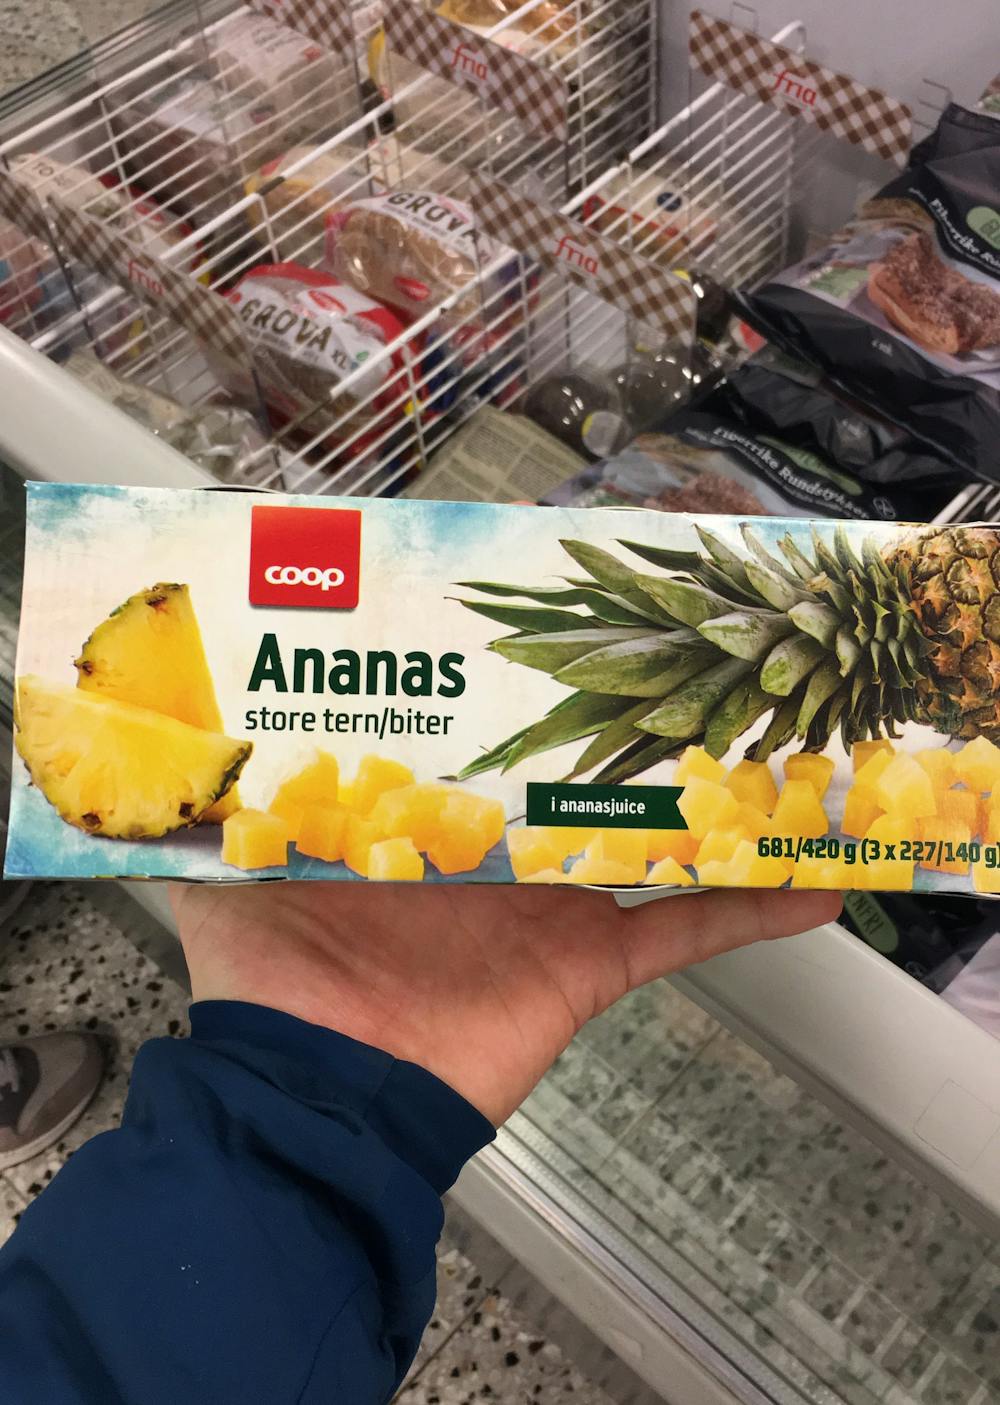 Ananas, i ananasjuice, Coop